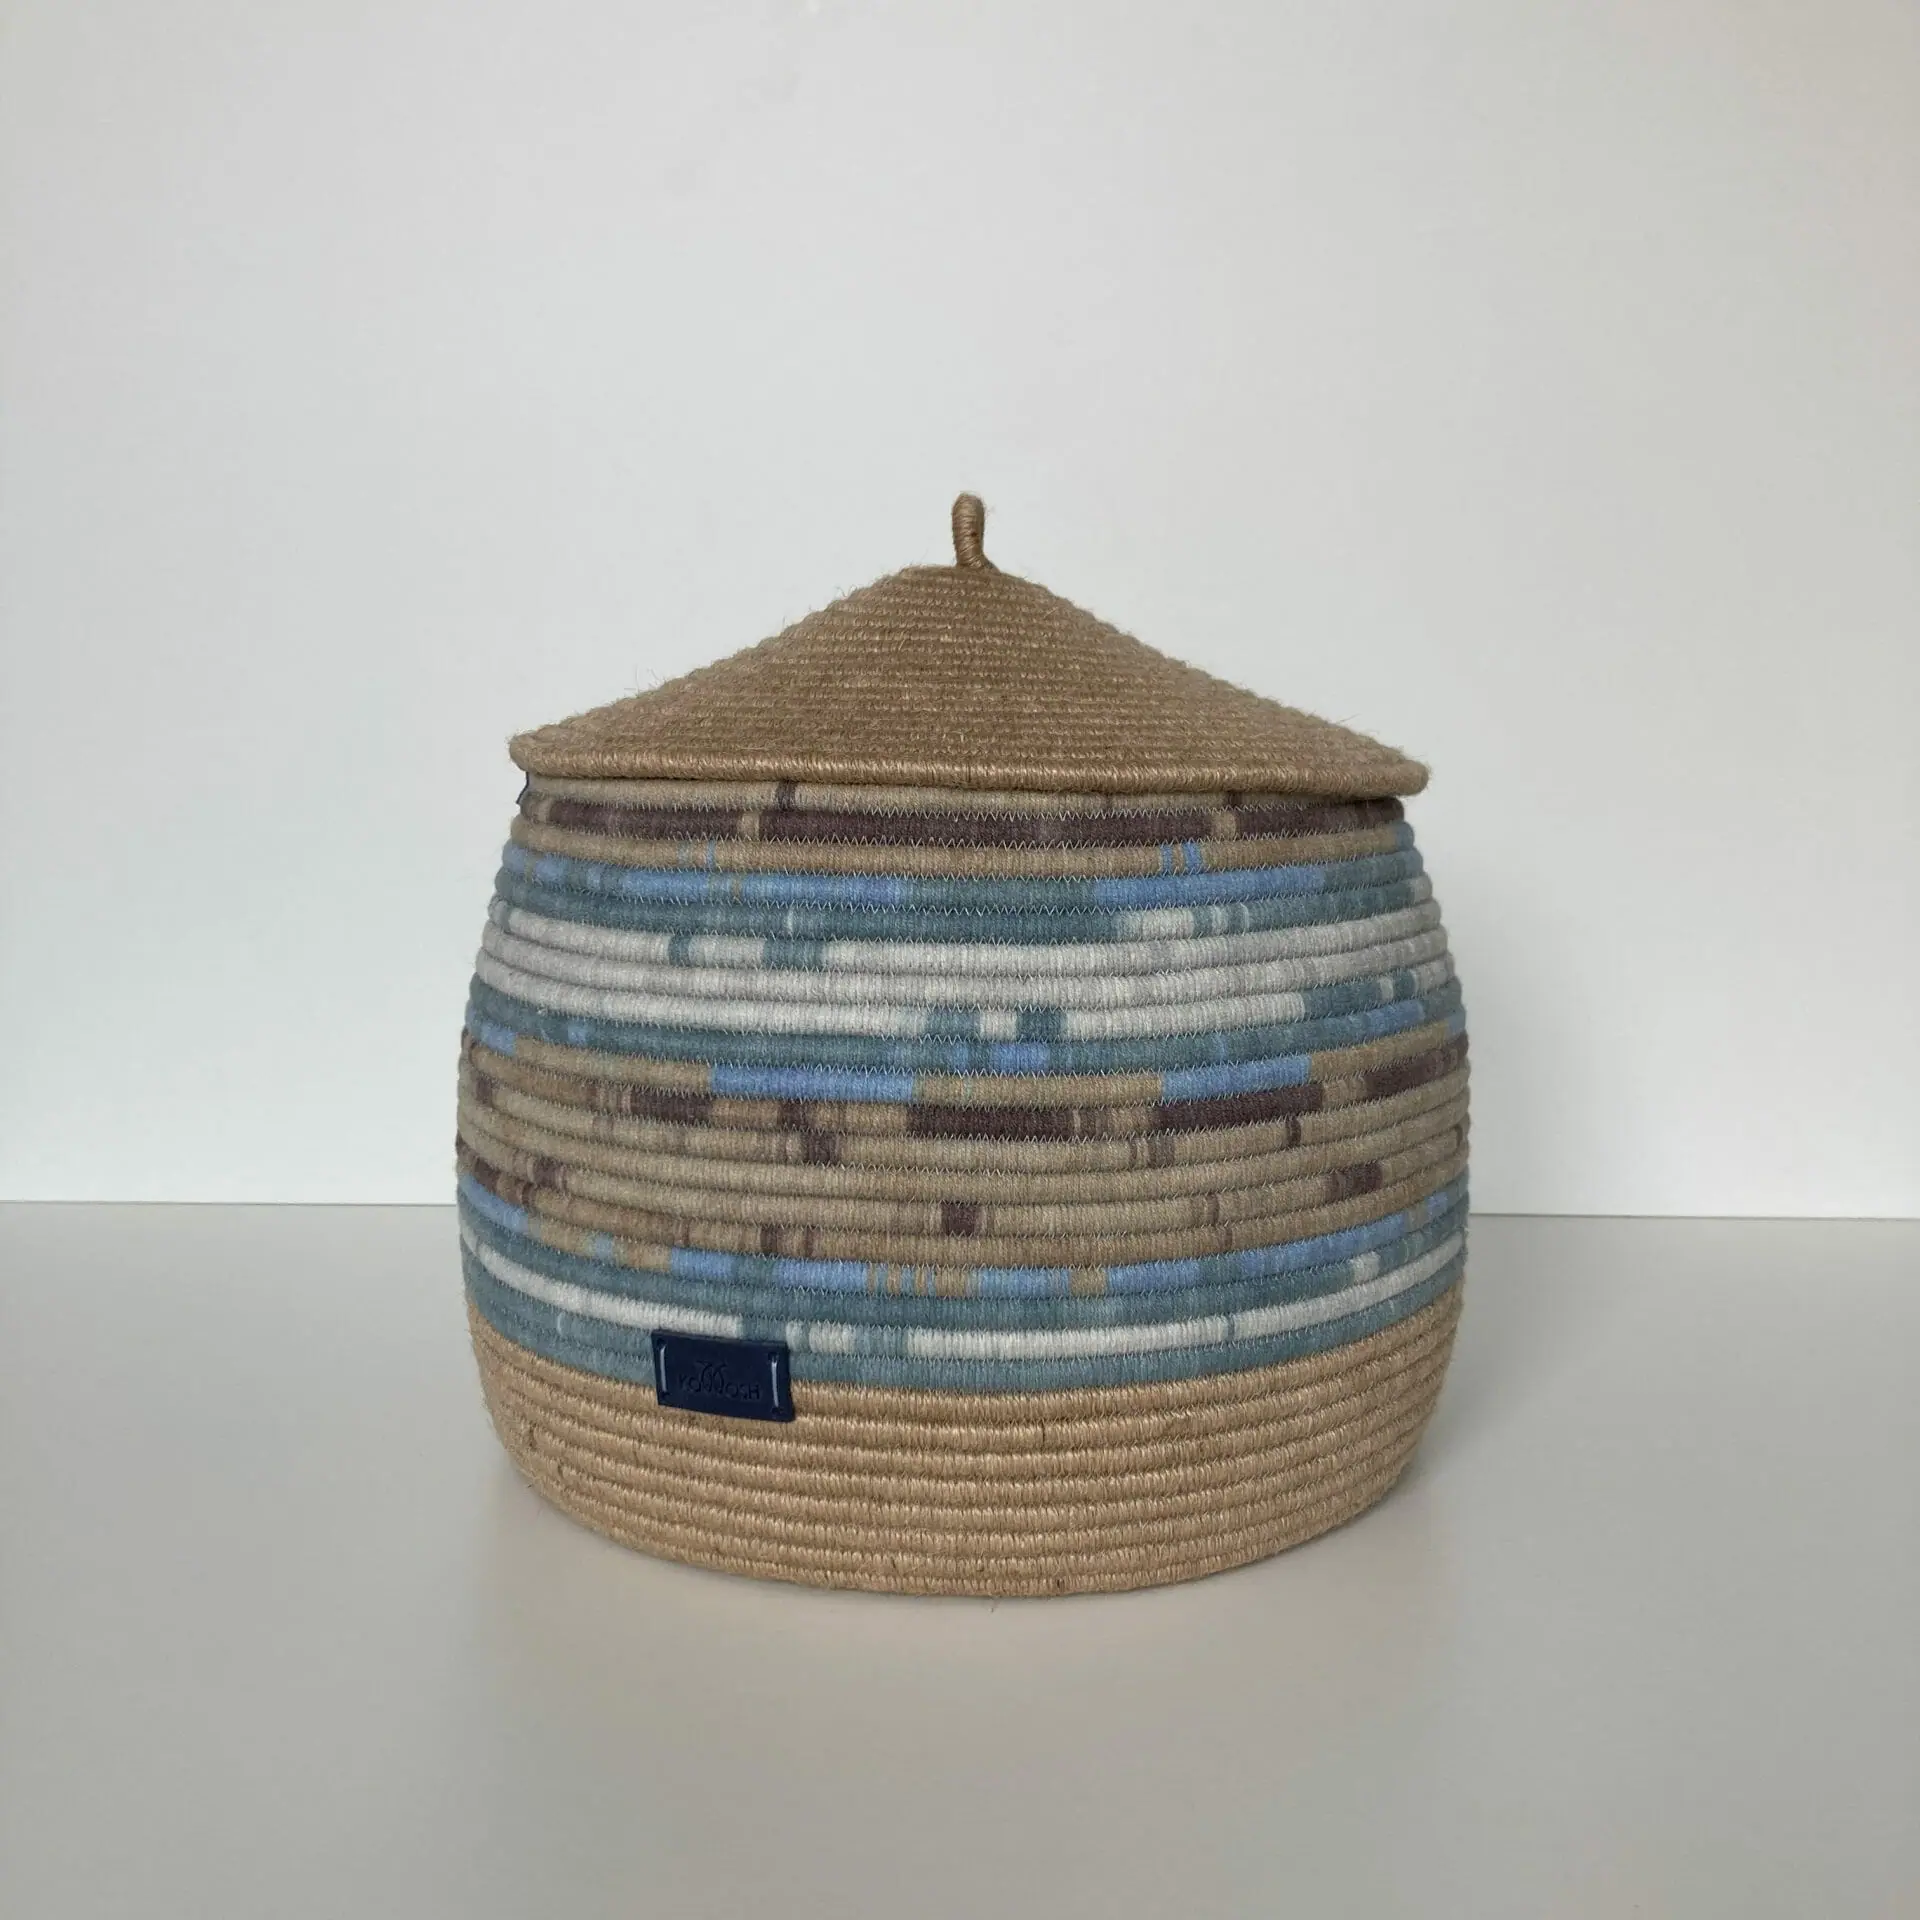 Large Jute Storage Basket with lid 10.5” x 10.2”